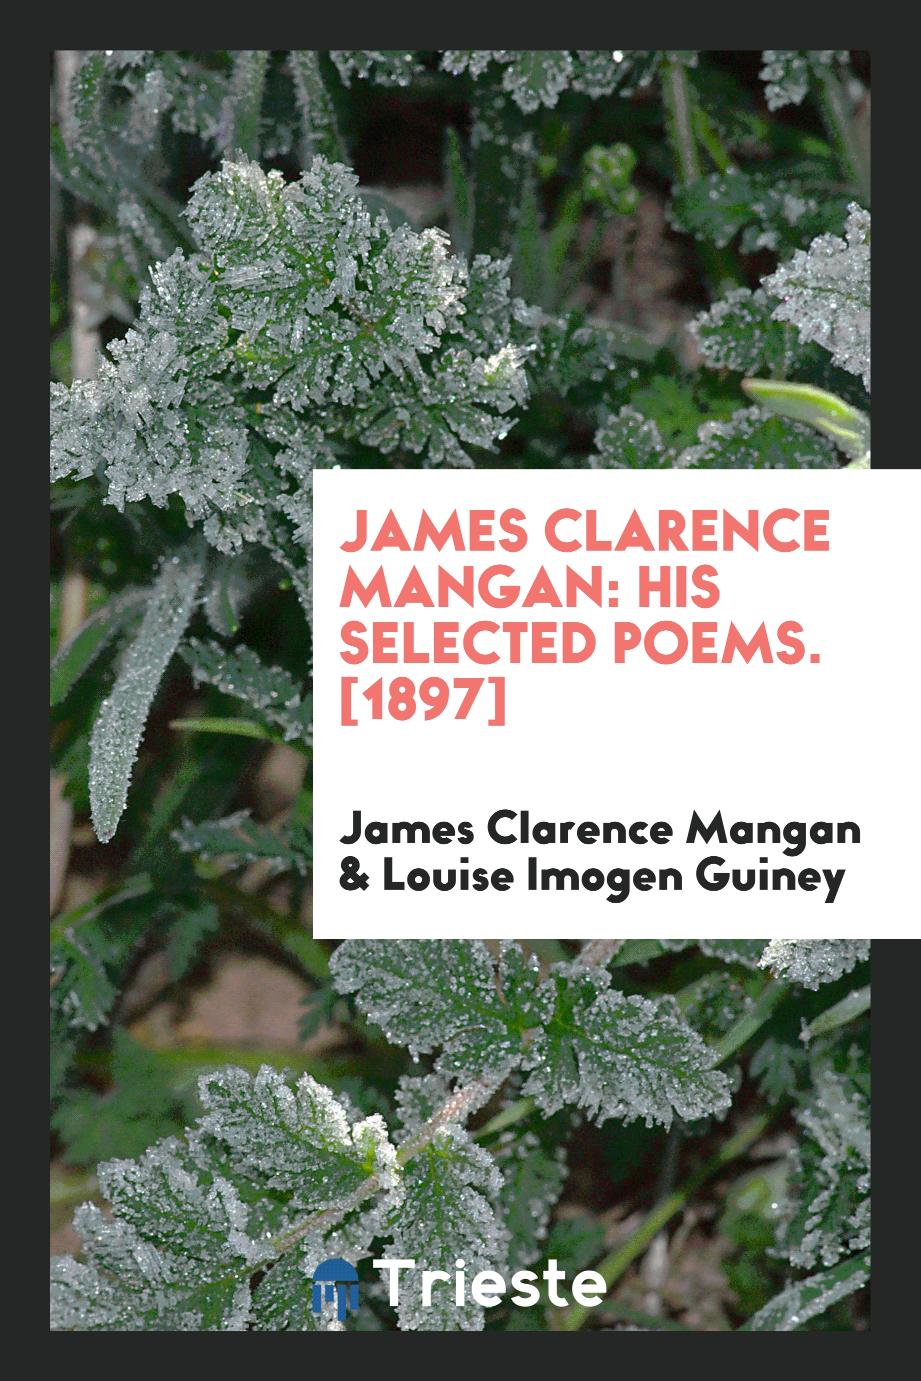 James Clarence Mangan: His Selected Poems. [1897]